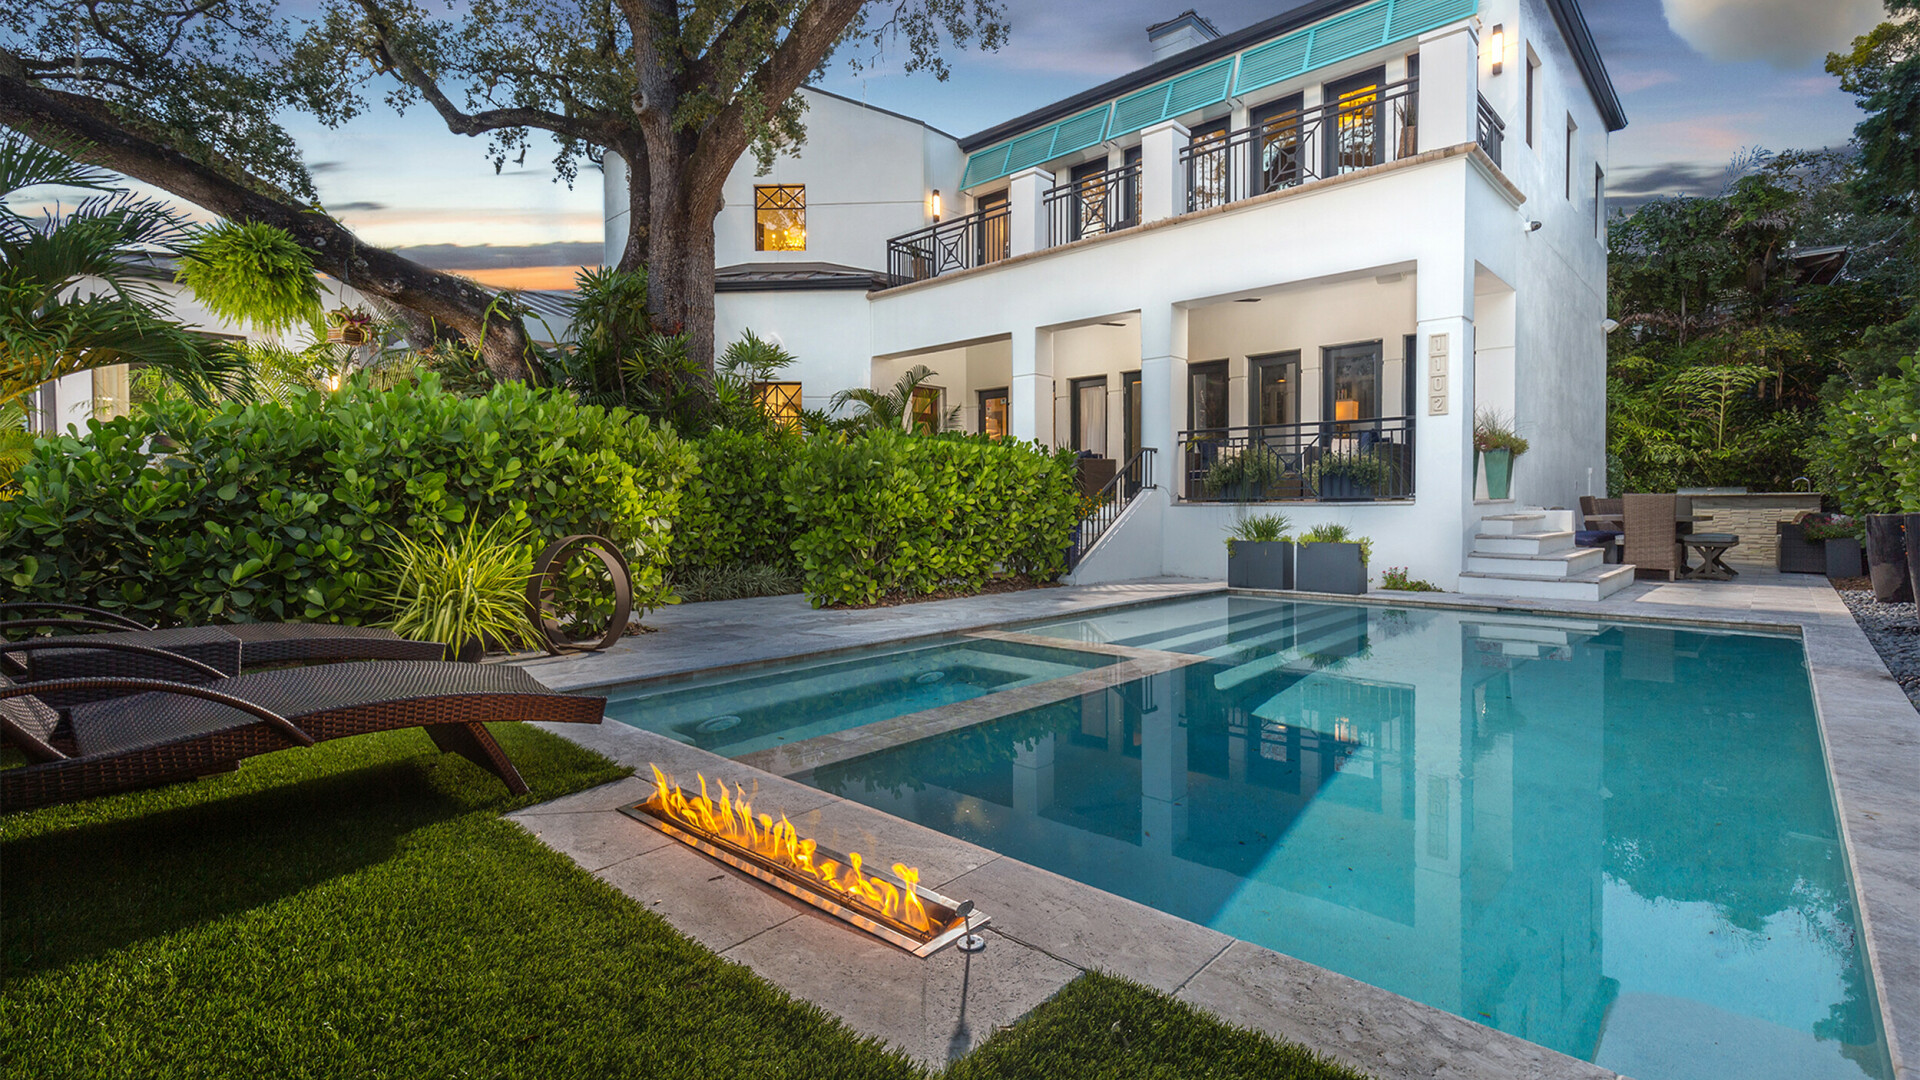 Rear view of luxury modern home boasting an infinity pool, St. Petersburg FL